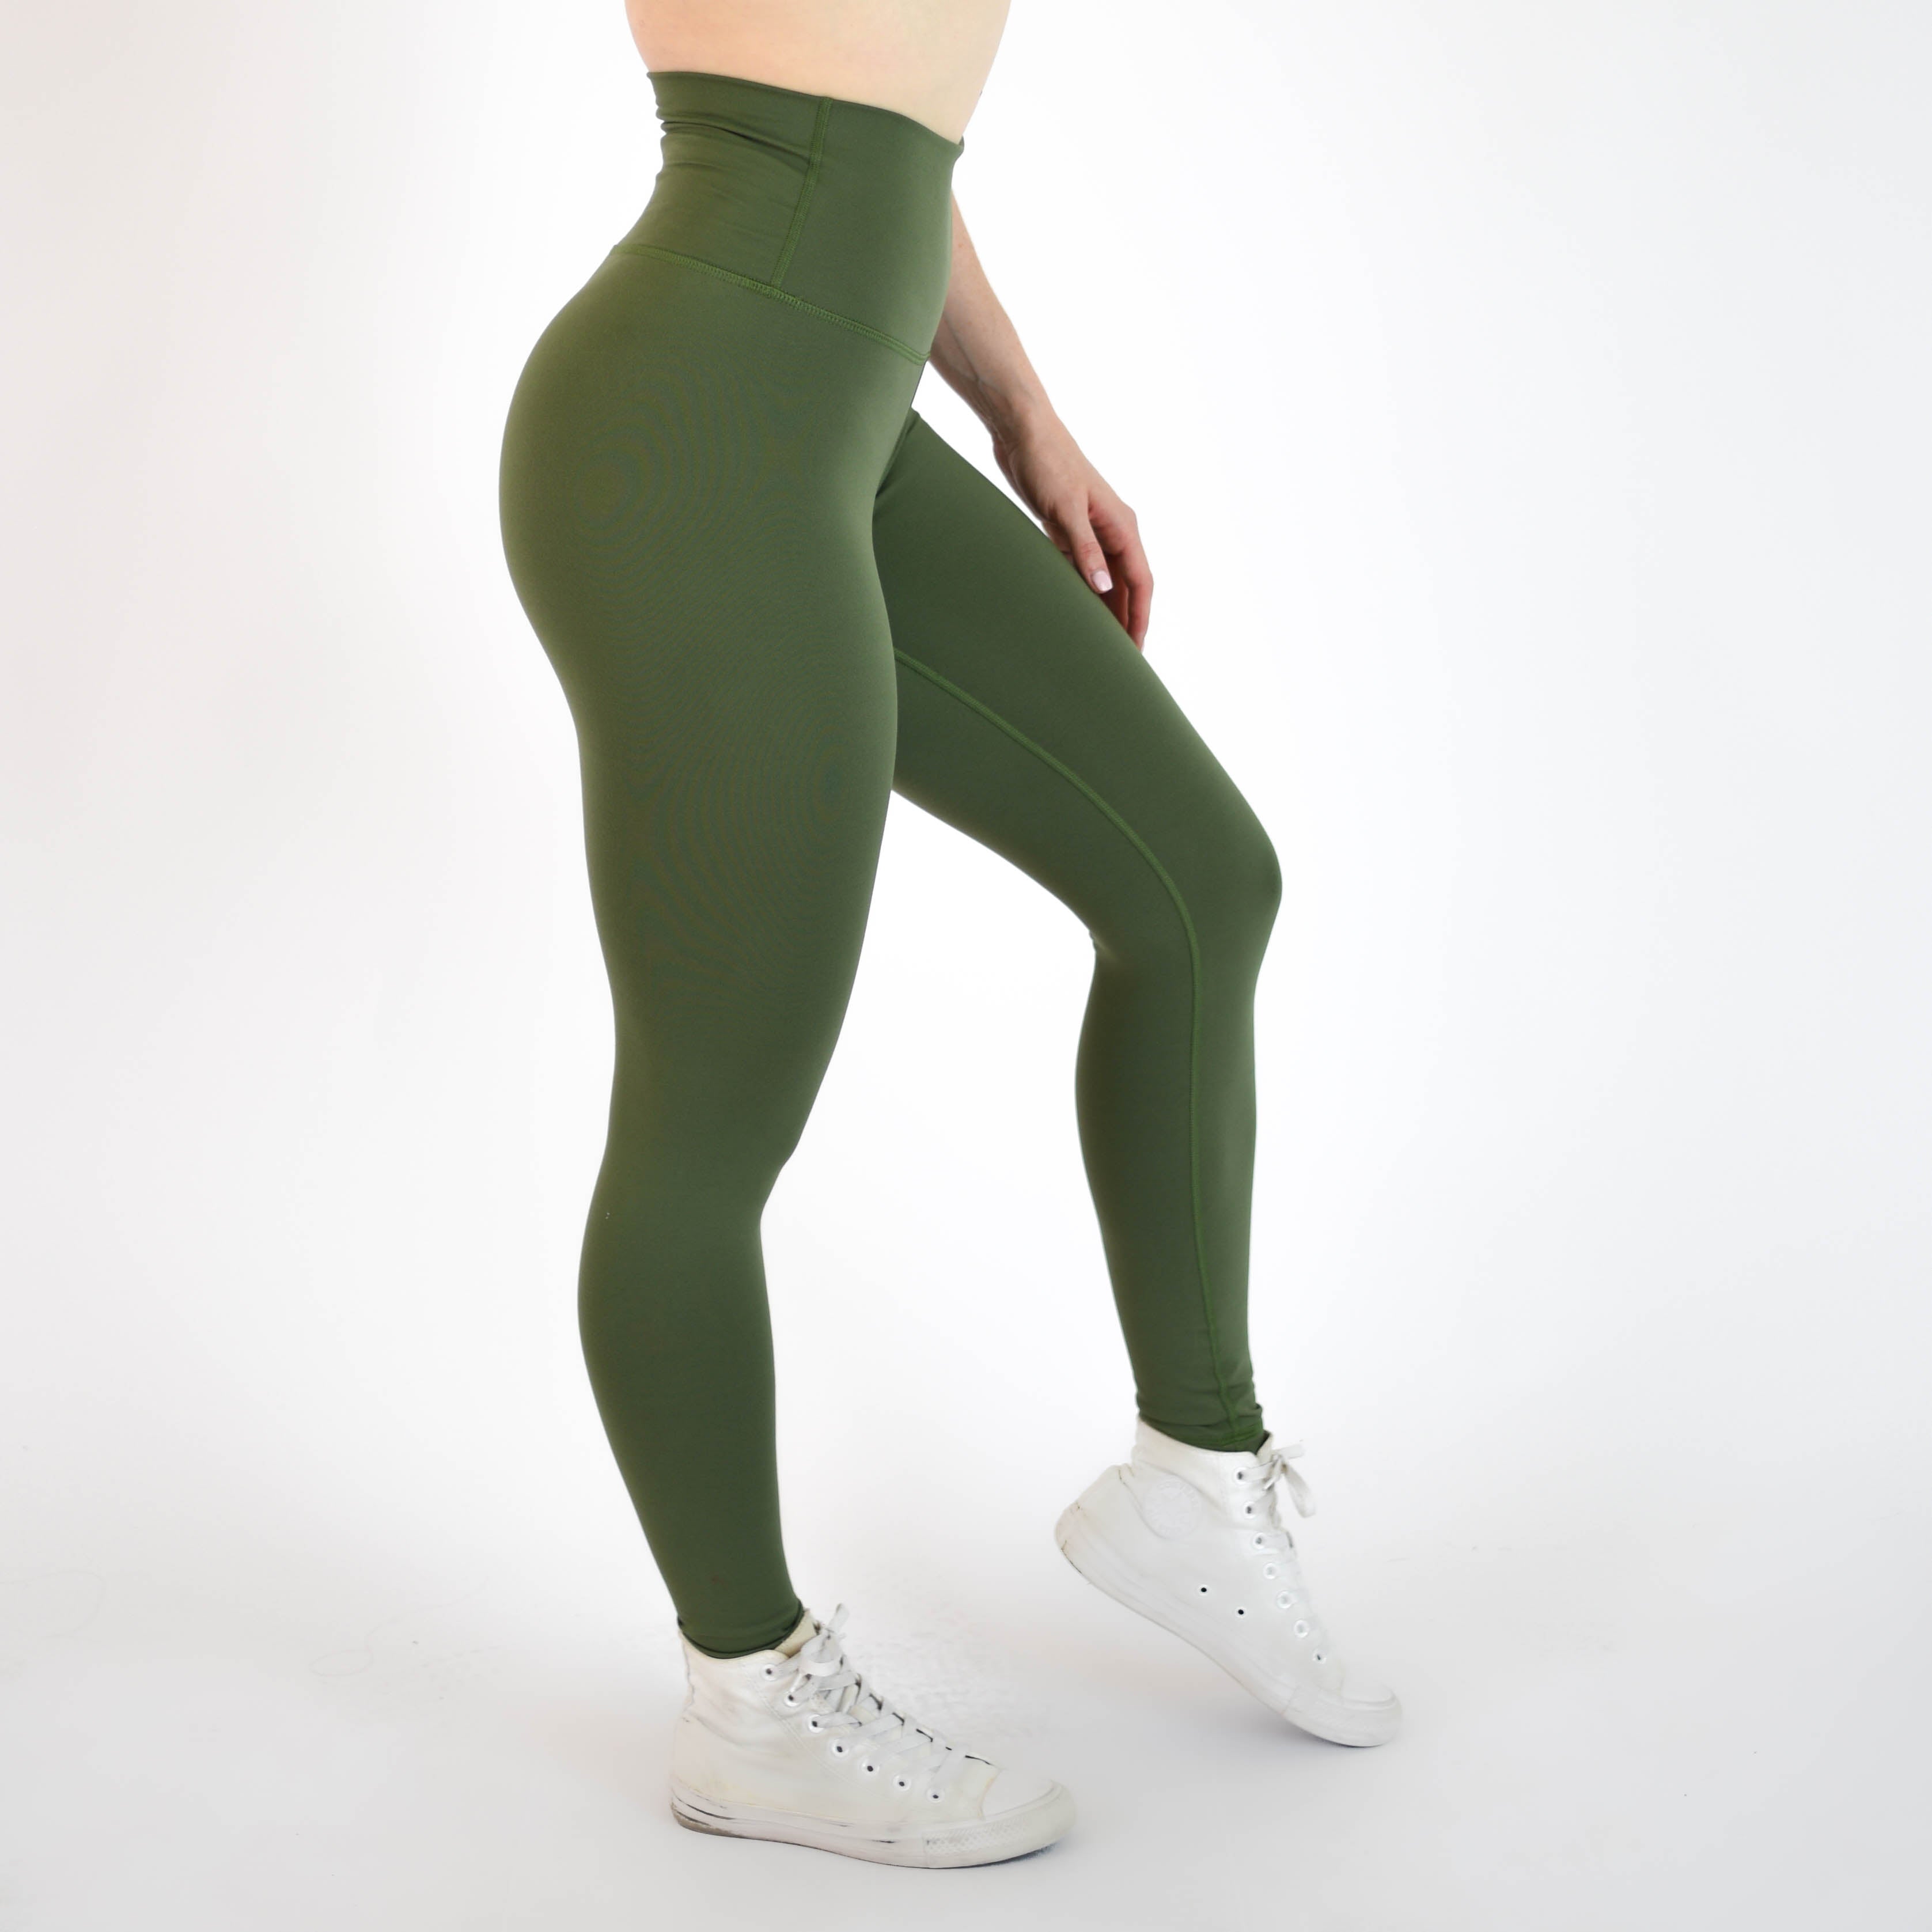 Bronze Green Super High Leggings - Bounce Fabric